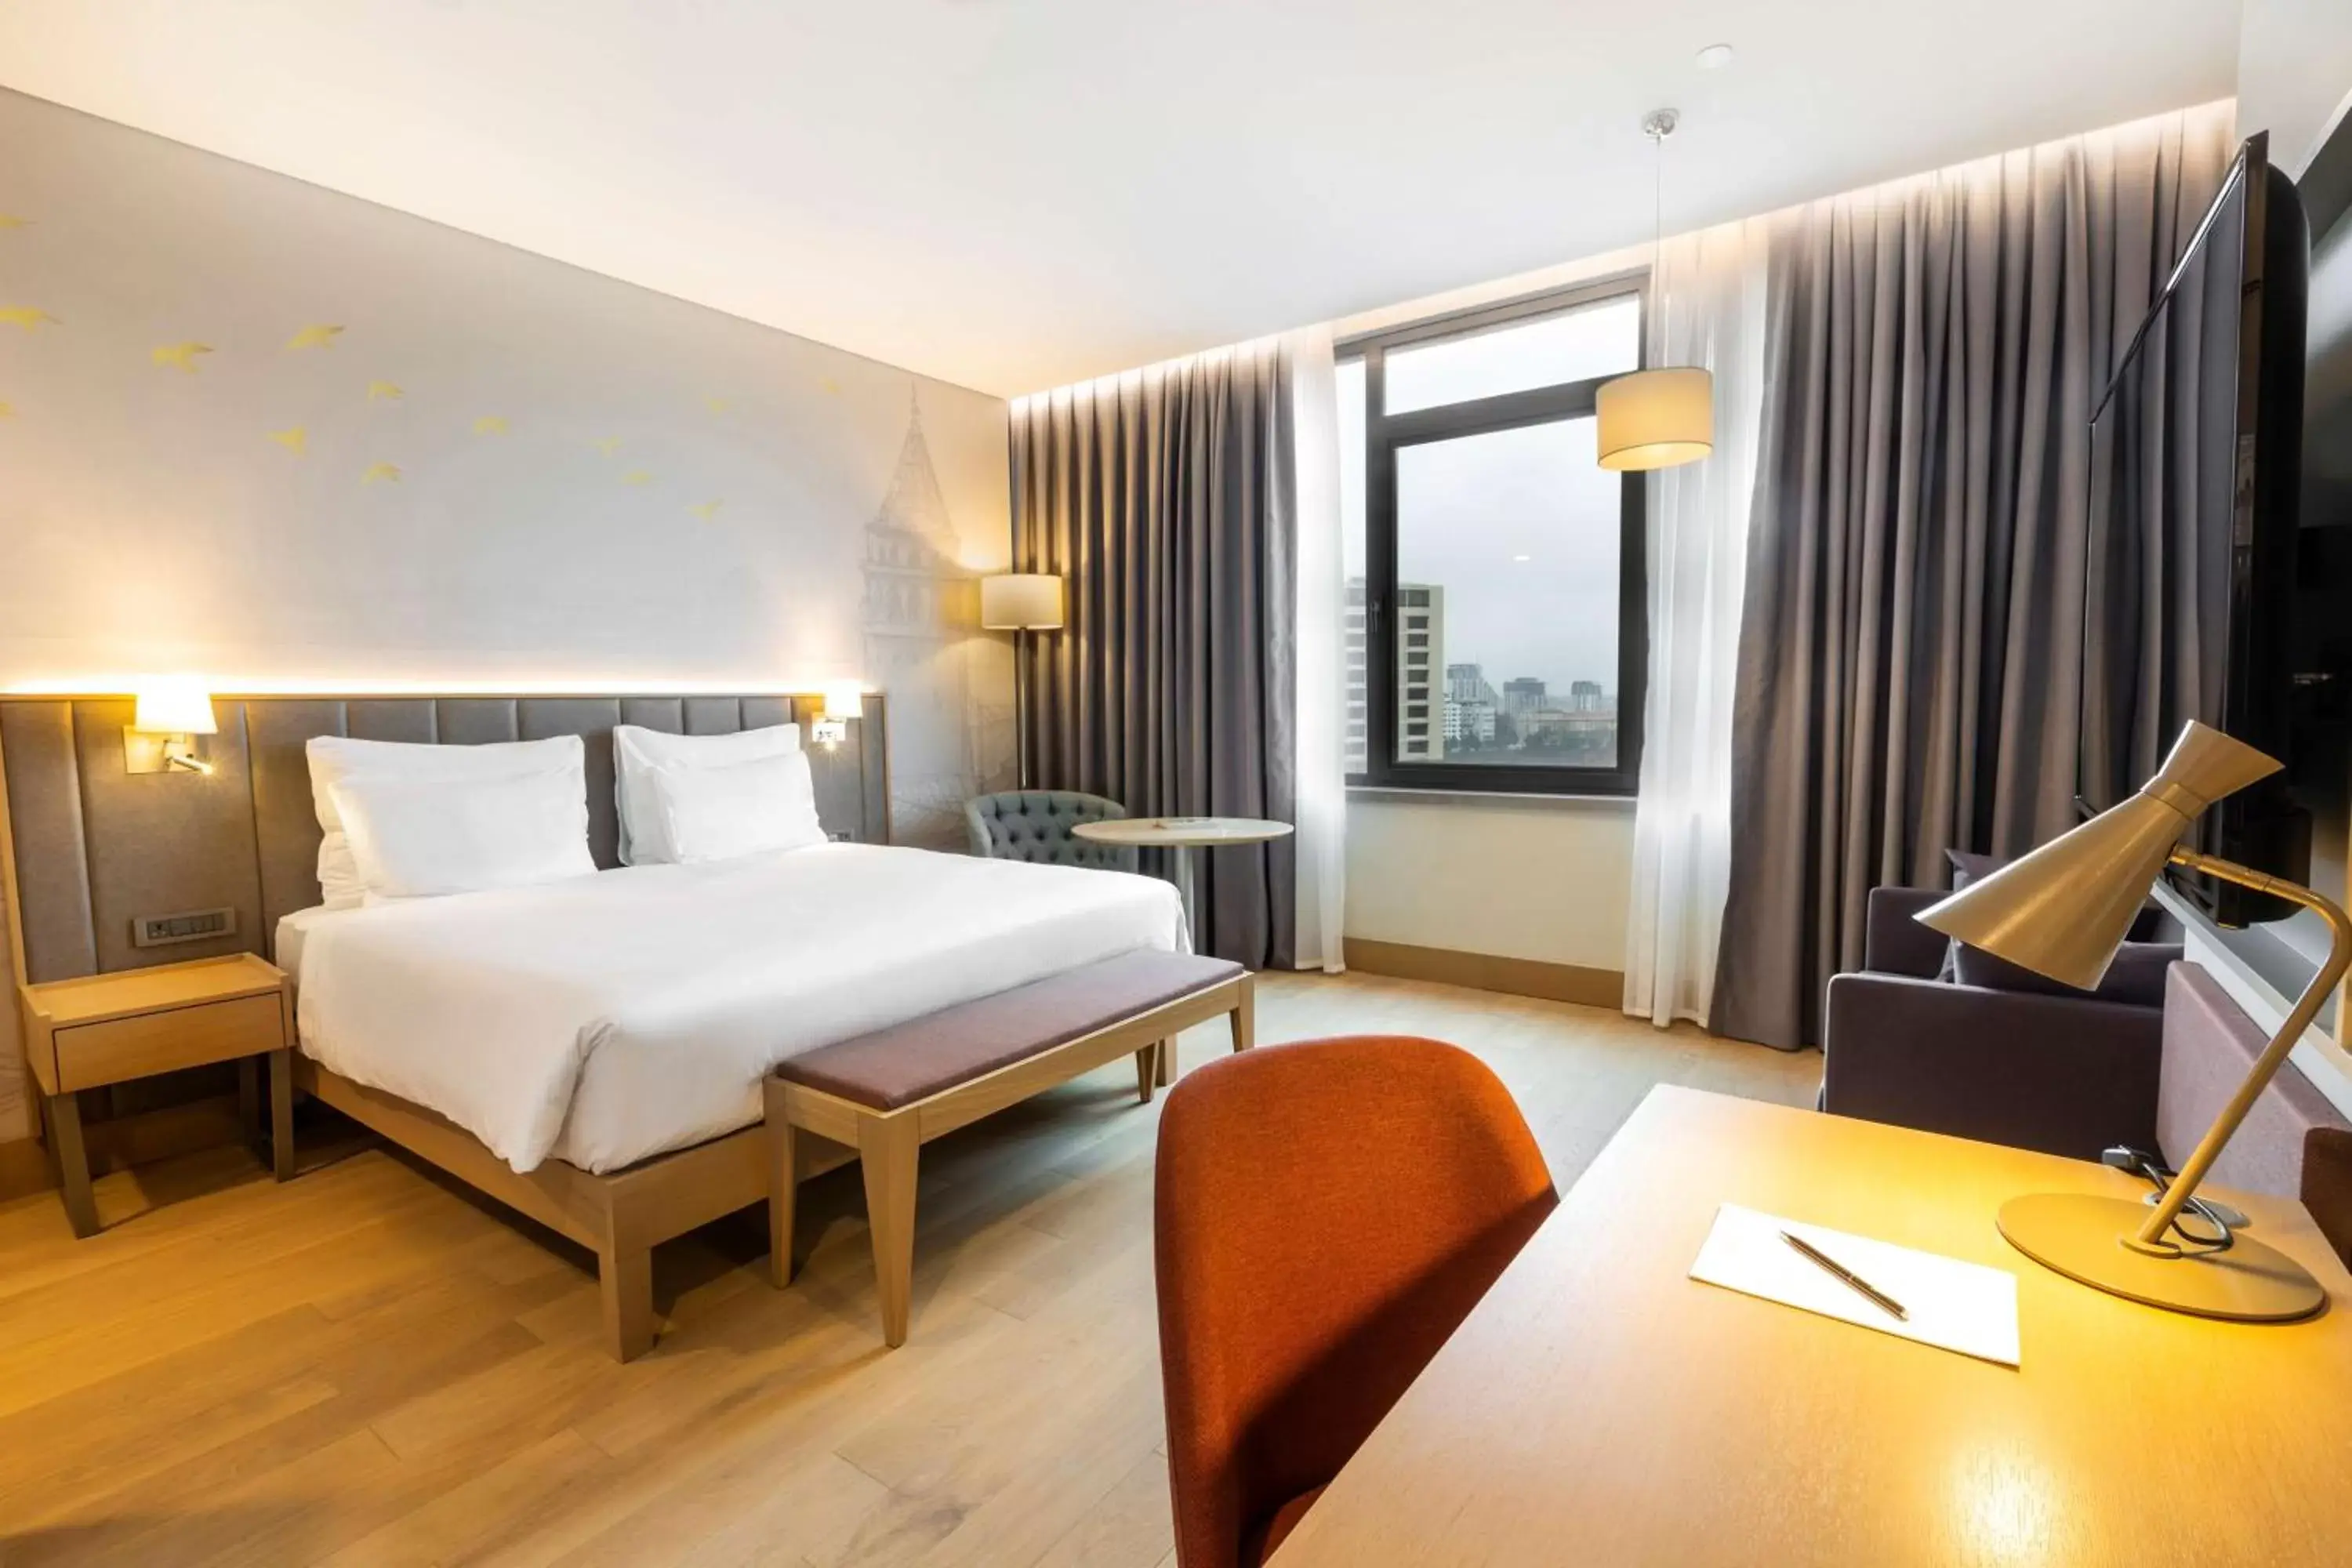 Bedroom, Bed in Radisson Hotel Istanbul Harbiye